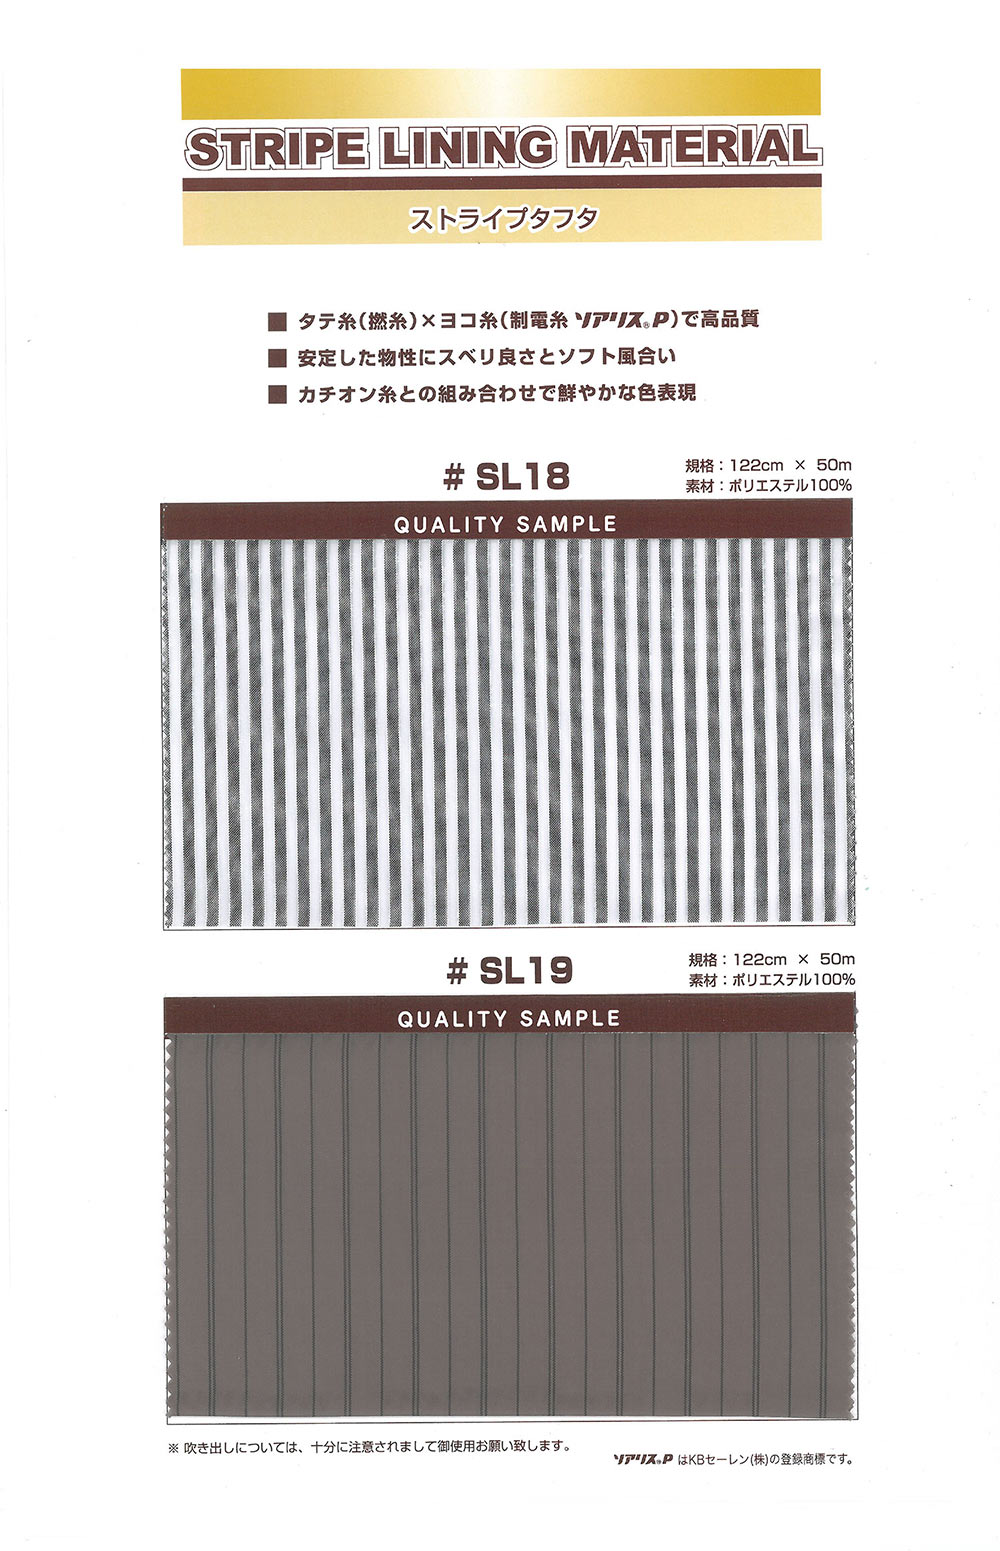 SL19 Lụa Taffeta Kẻ Sọc[Vải Lót] Nishiyama